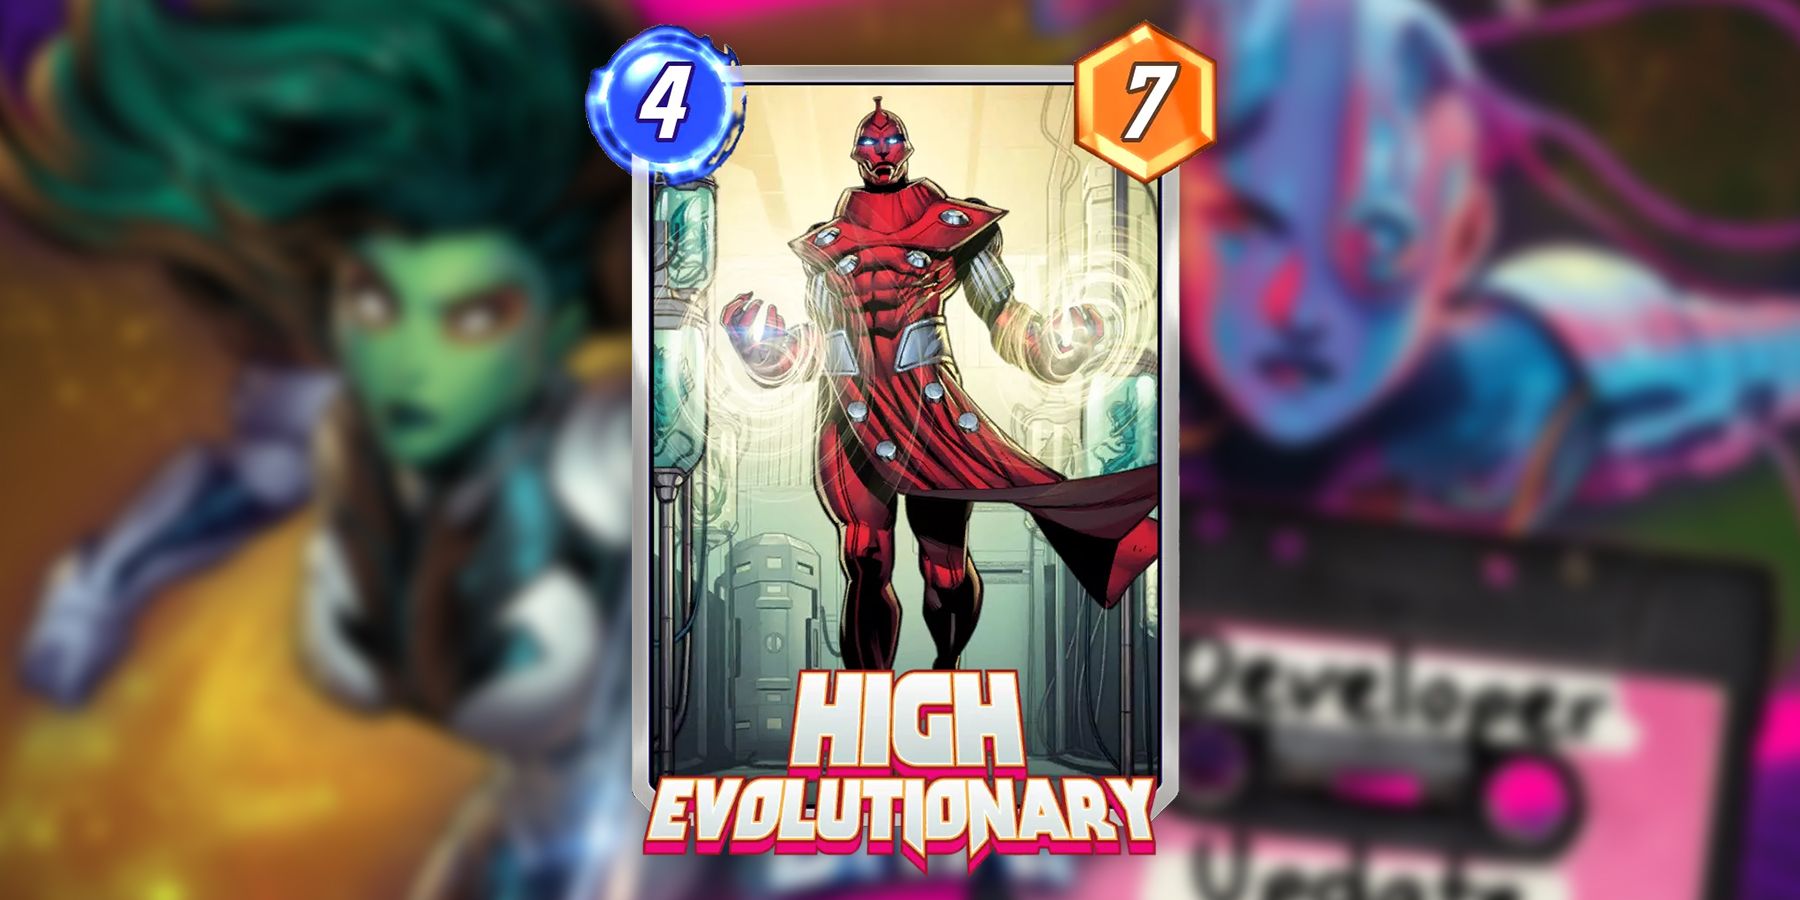 marvel-snap-high-evolutionary-card-guardians-greatest-hits